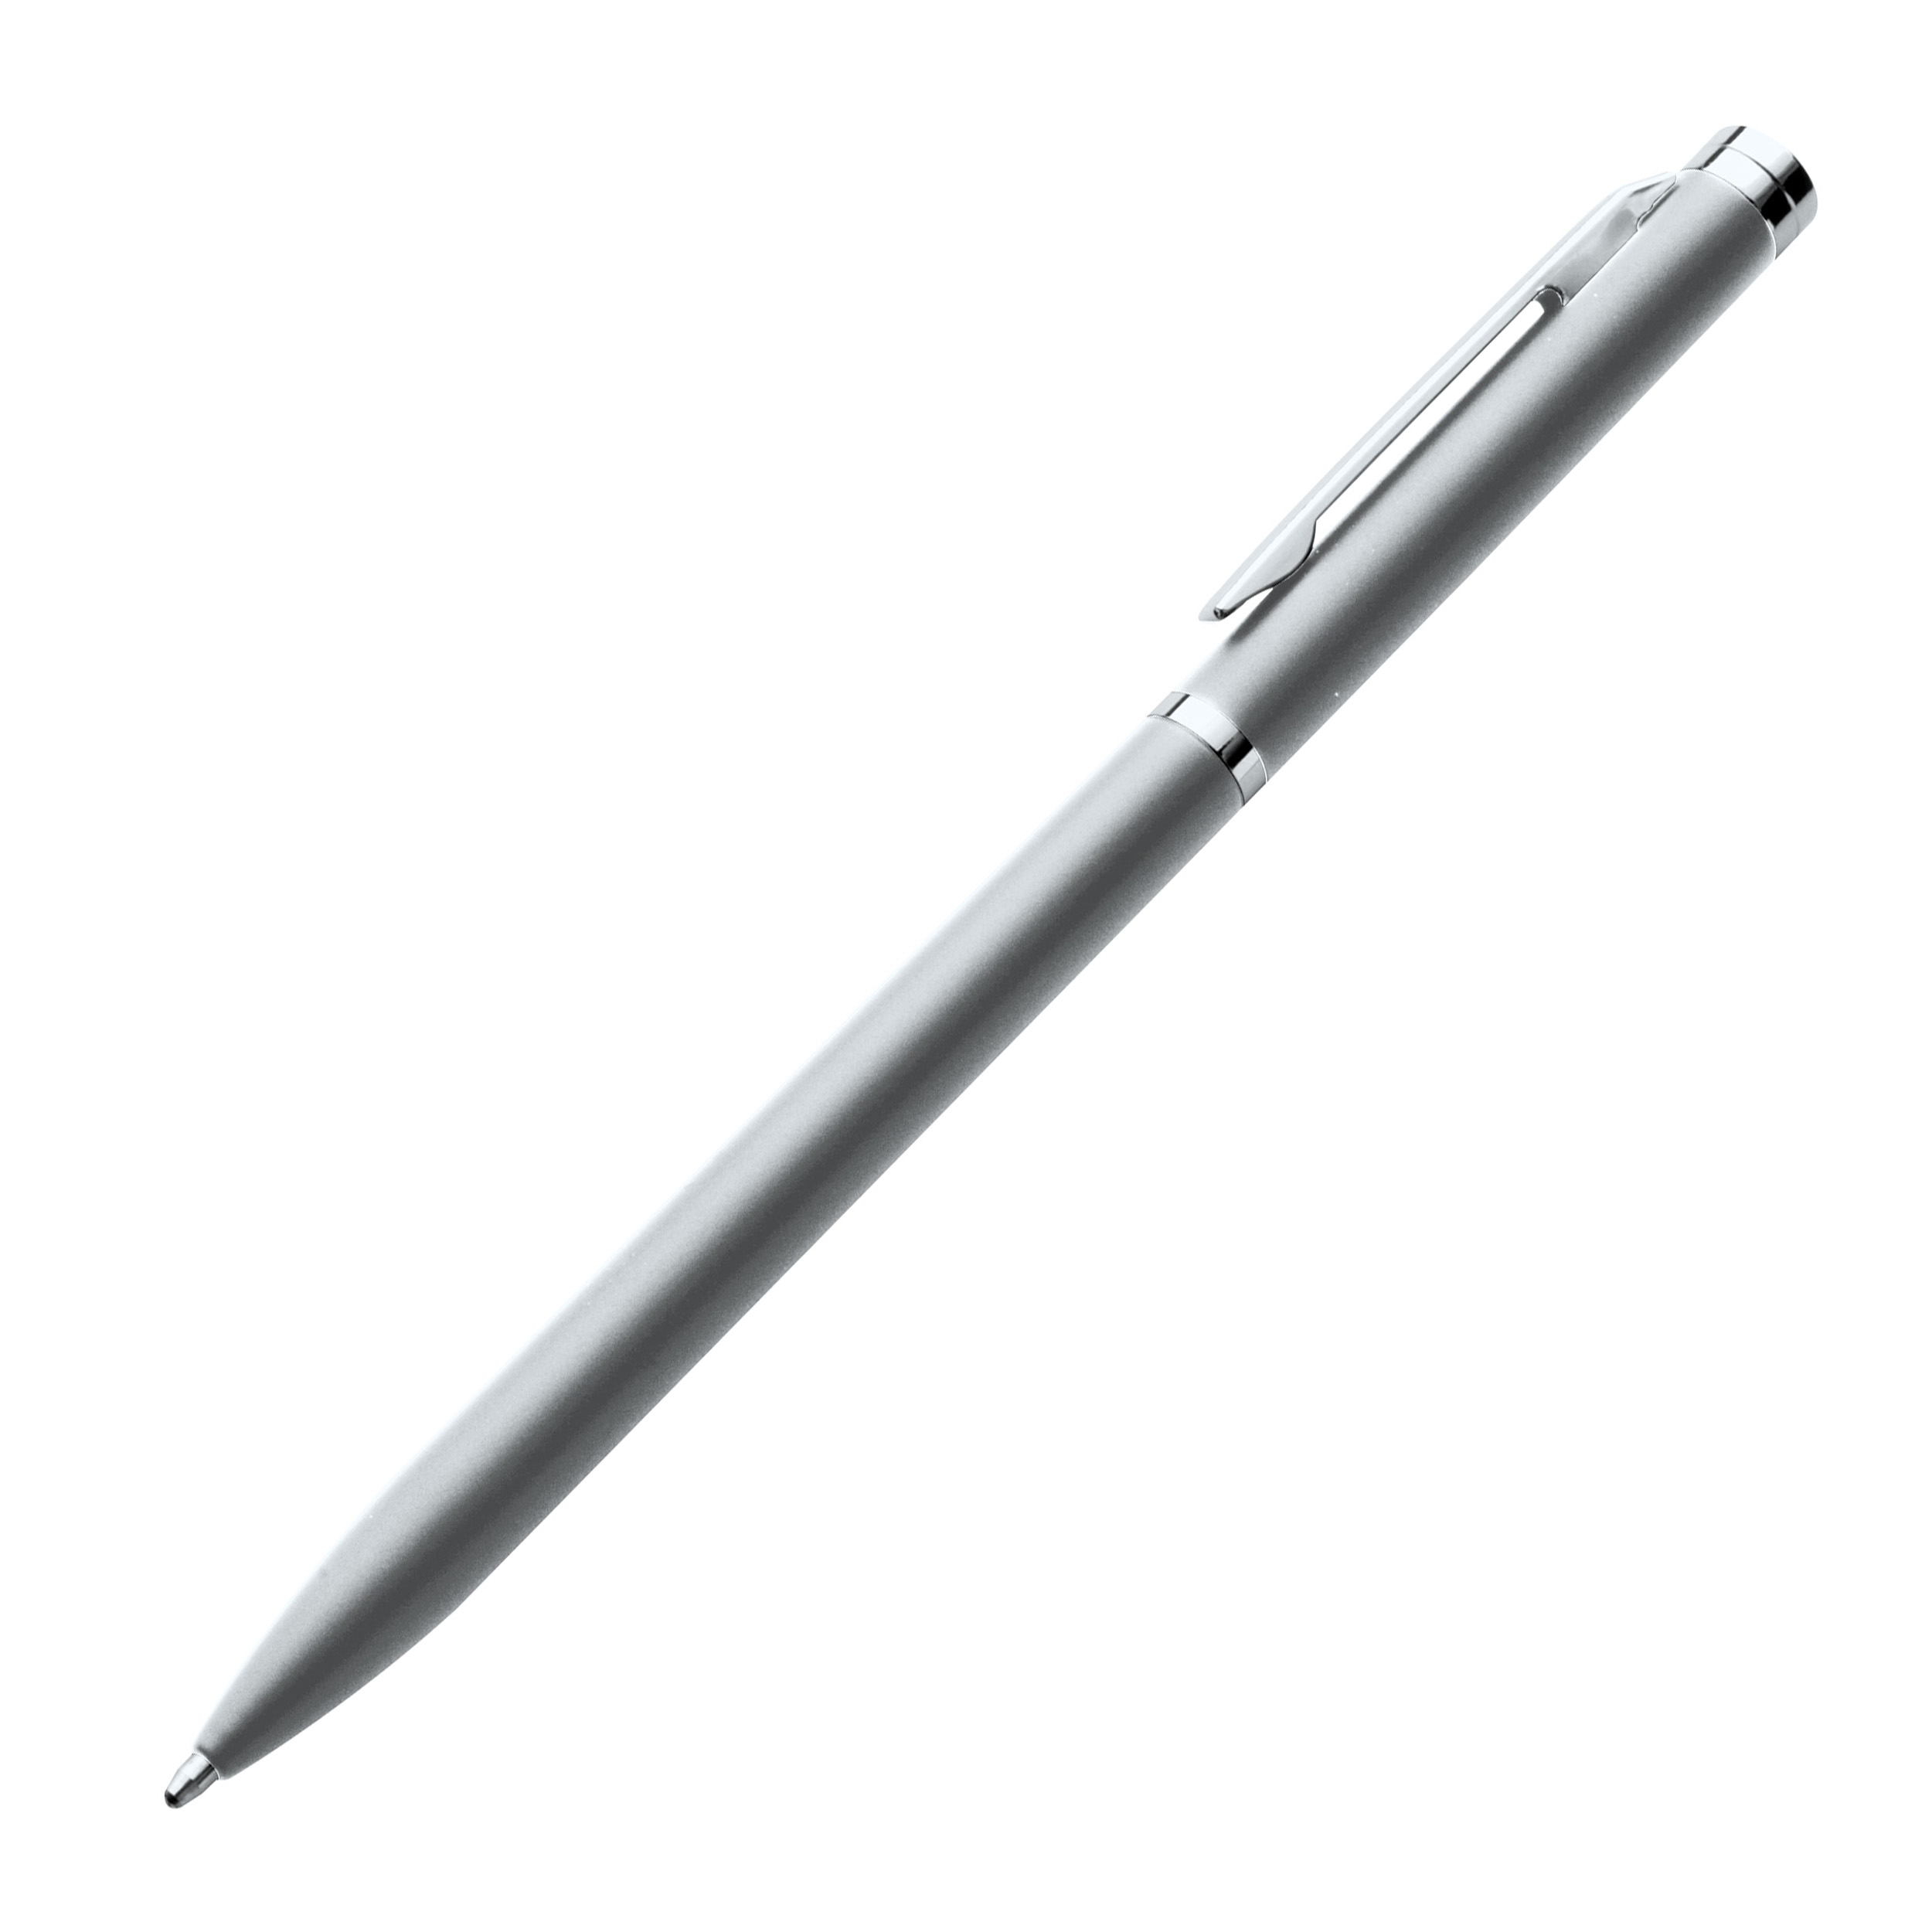 Metall-Kugelschreiber in schlanker Form